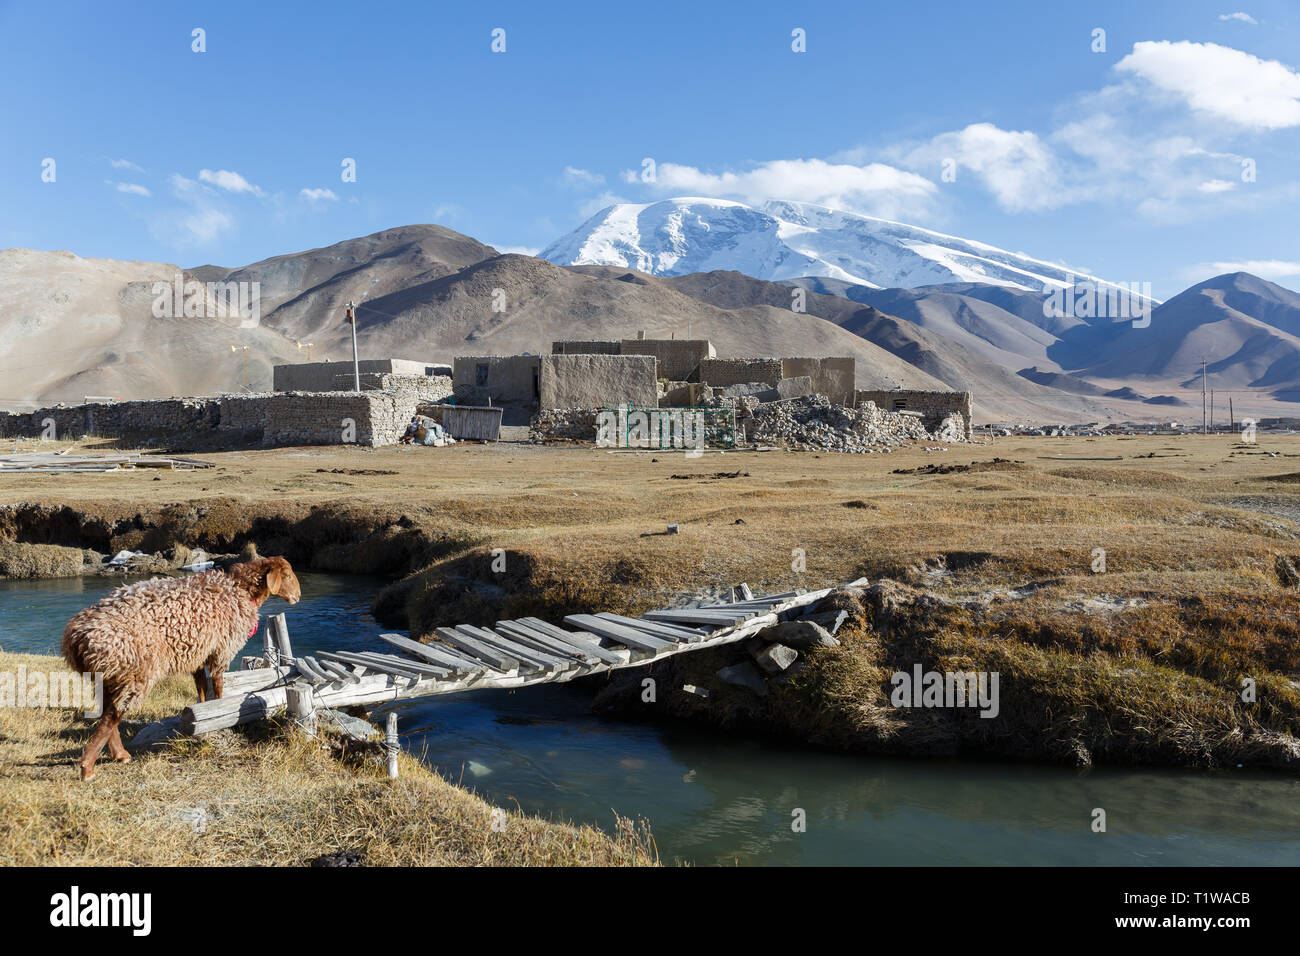 Lamb running over wooden bridge, near Mount Muztagata (Xinjiang Province, China) Stock Photo